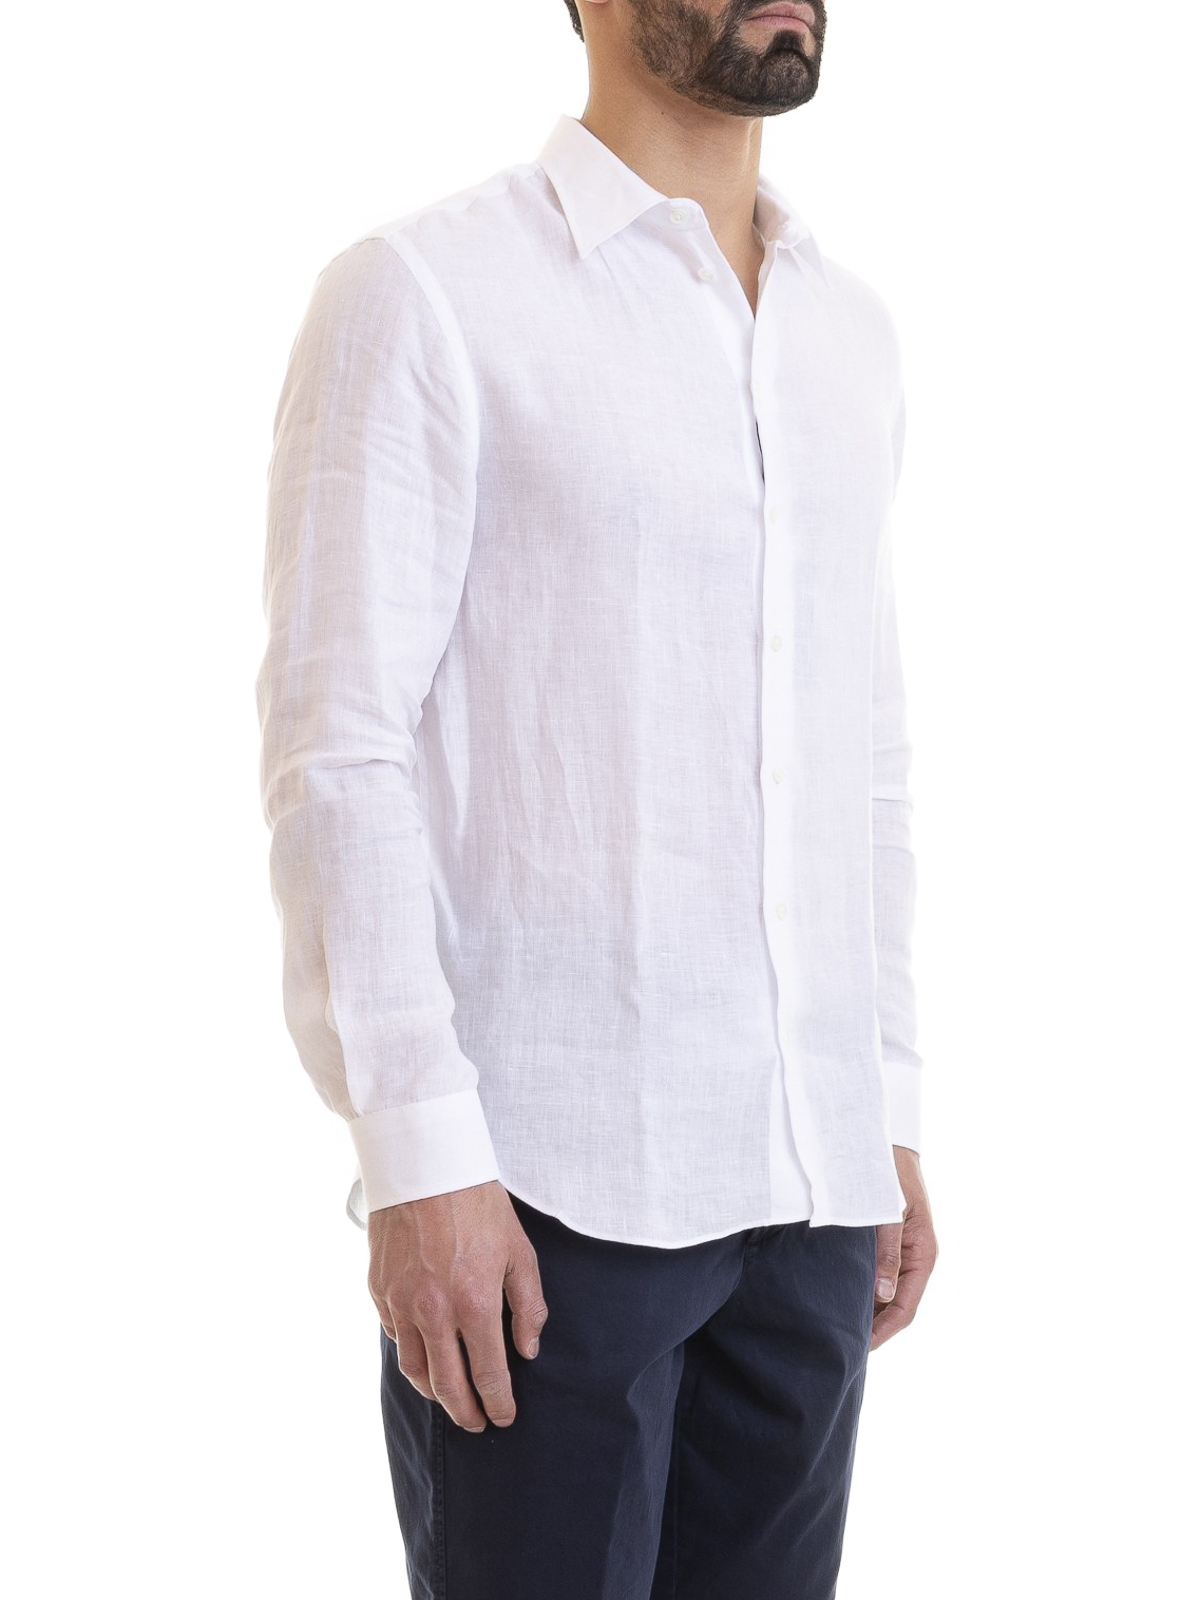 Emporio Armani - White linen shirt 